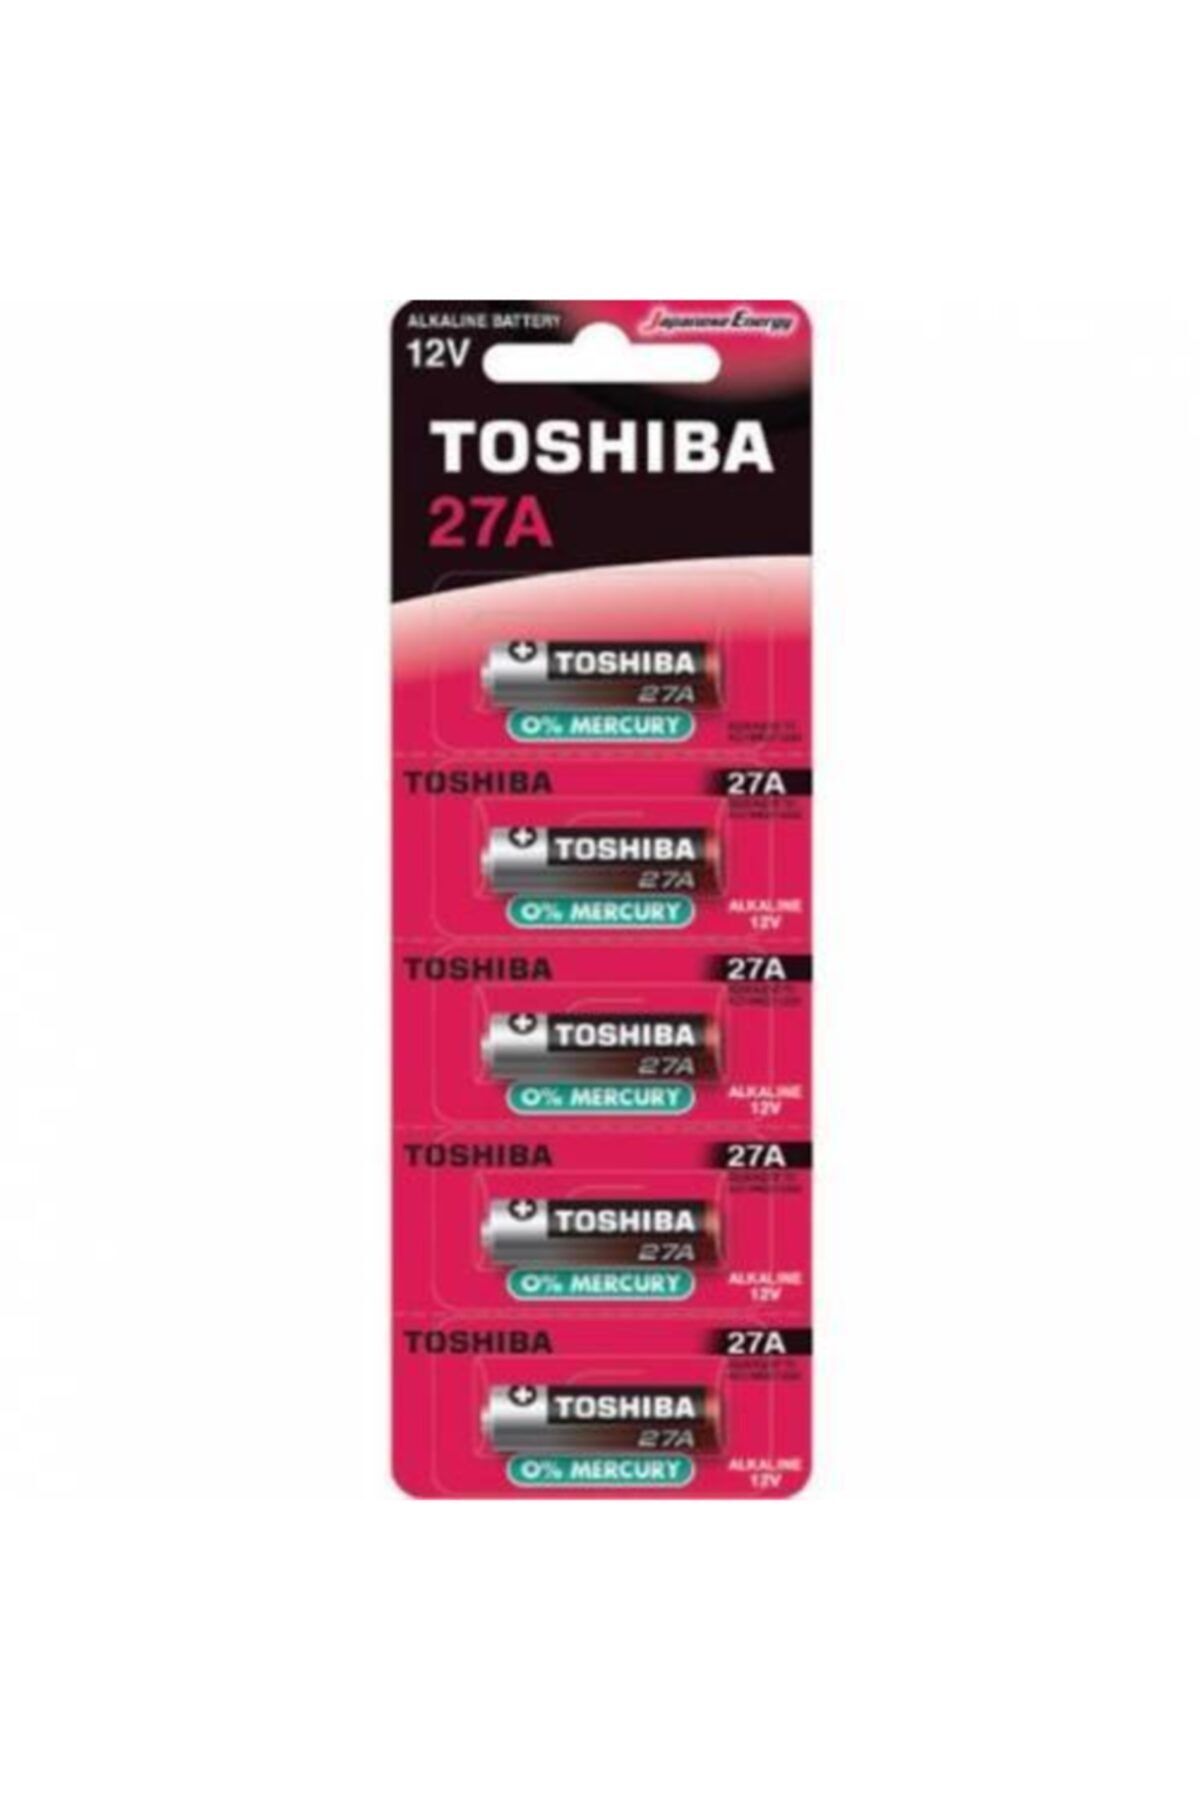 Toshiba 27a Bp-5c 12 Volt Alkalin Pil - Kumanda Pili - 5'li